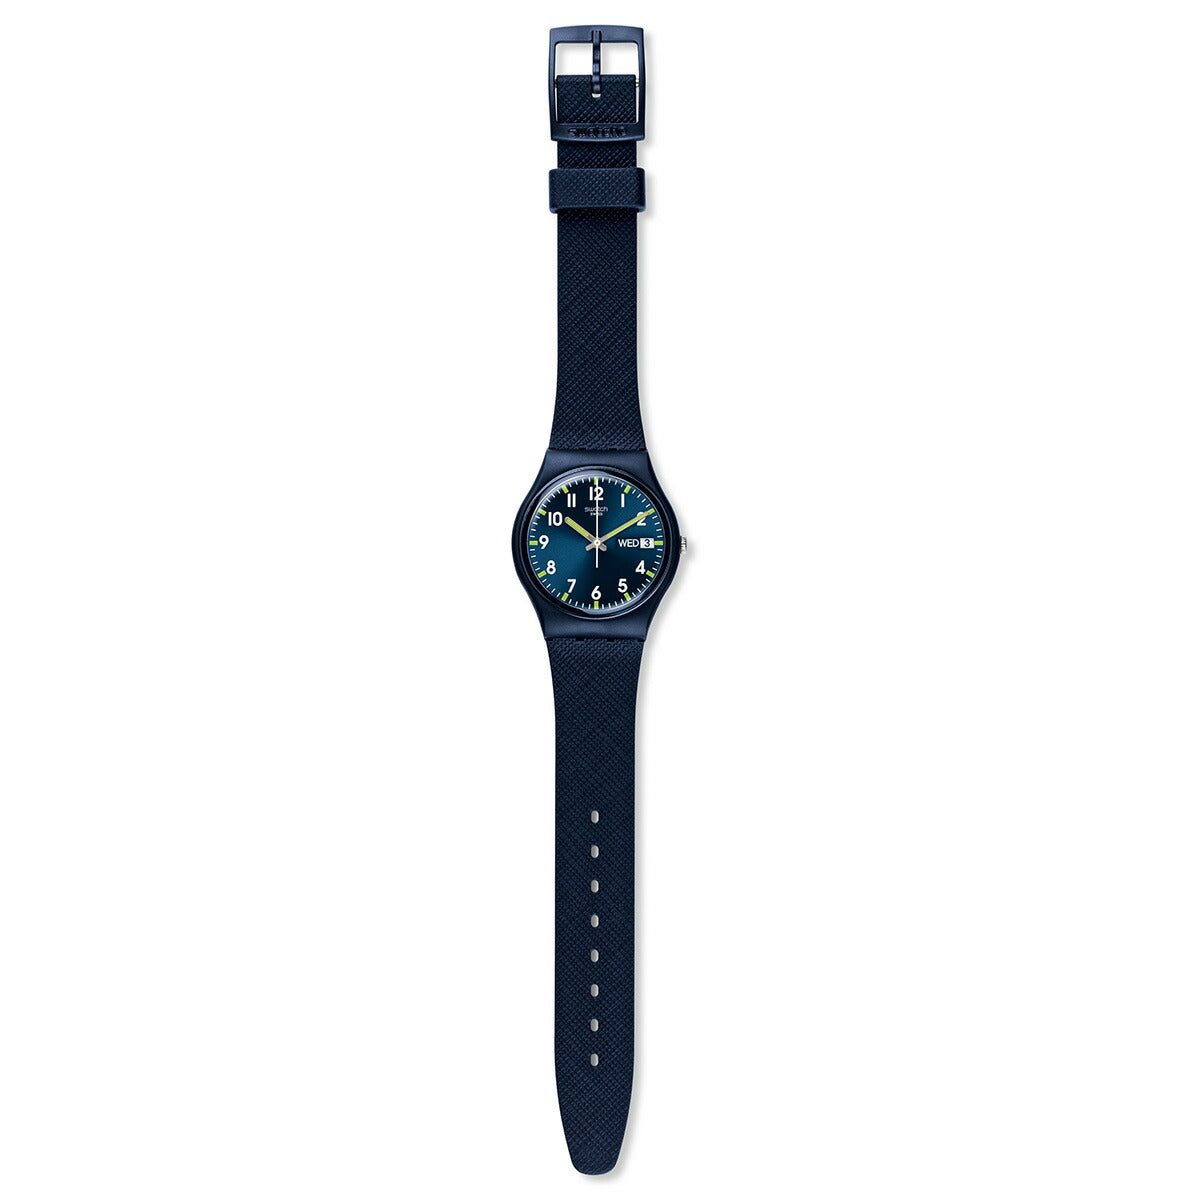 swatch スウォッチ 腕時計 メンズ レディース オリジナルズ ジェント サー・ブルー Originals Gent SIR BLUE GN718